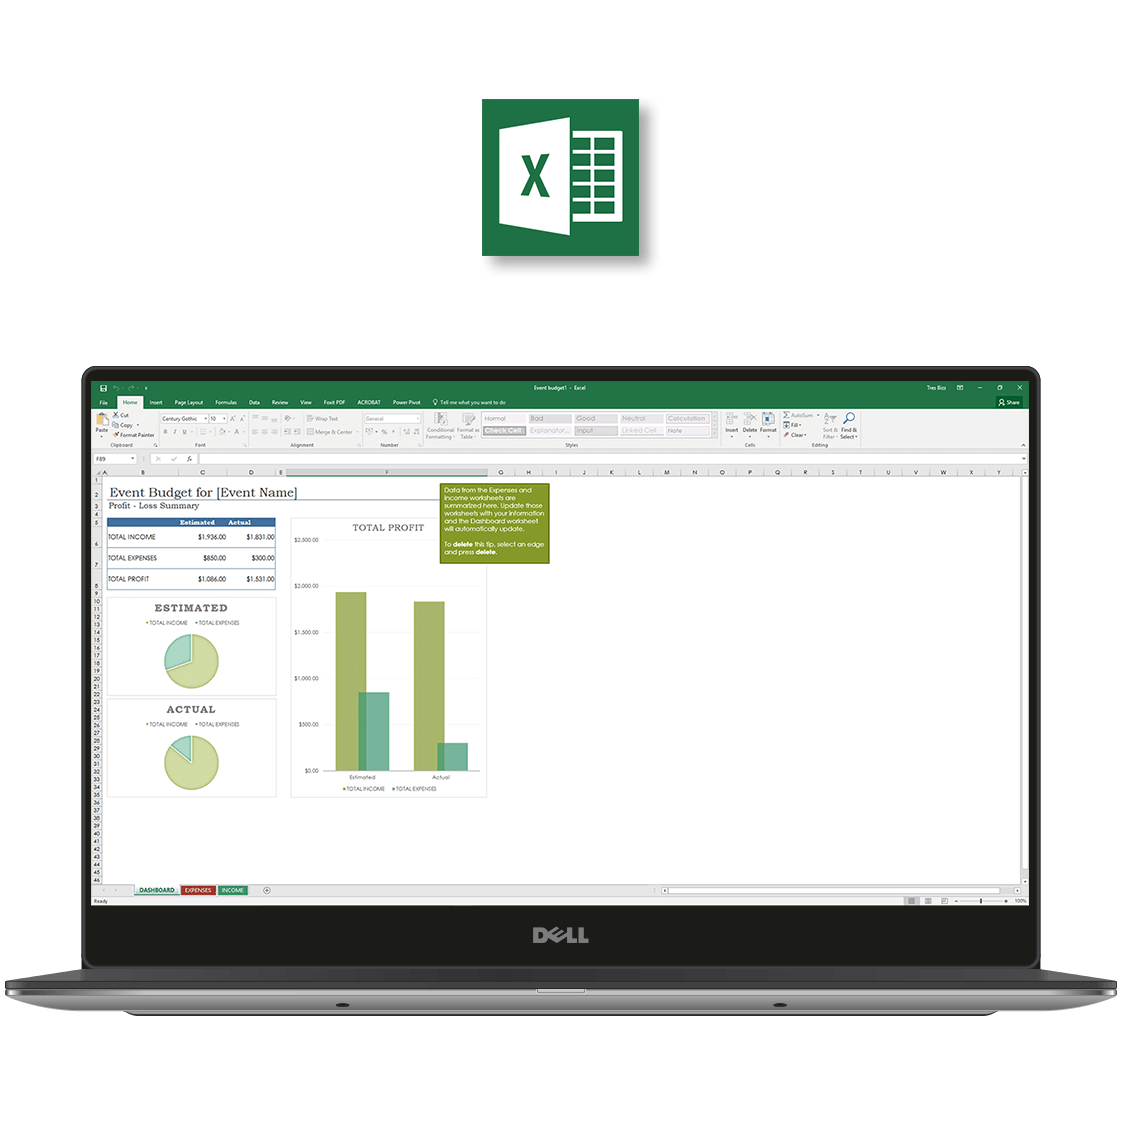 Ofertas de licencia de Microsoft Excel 2013.com